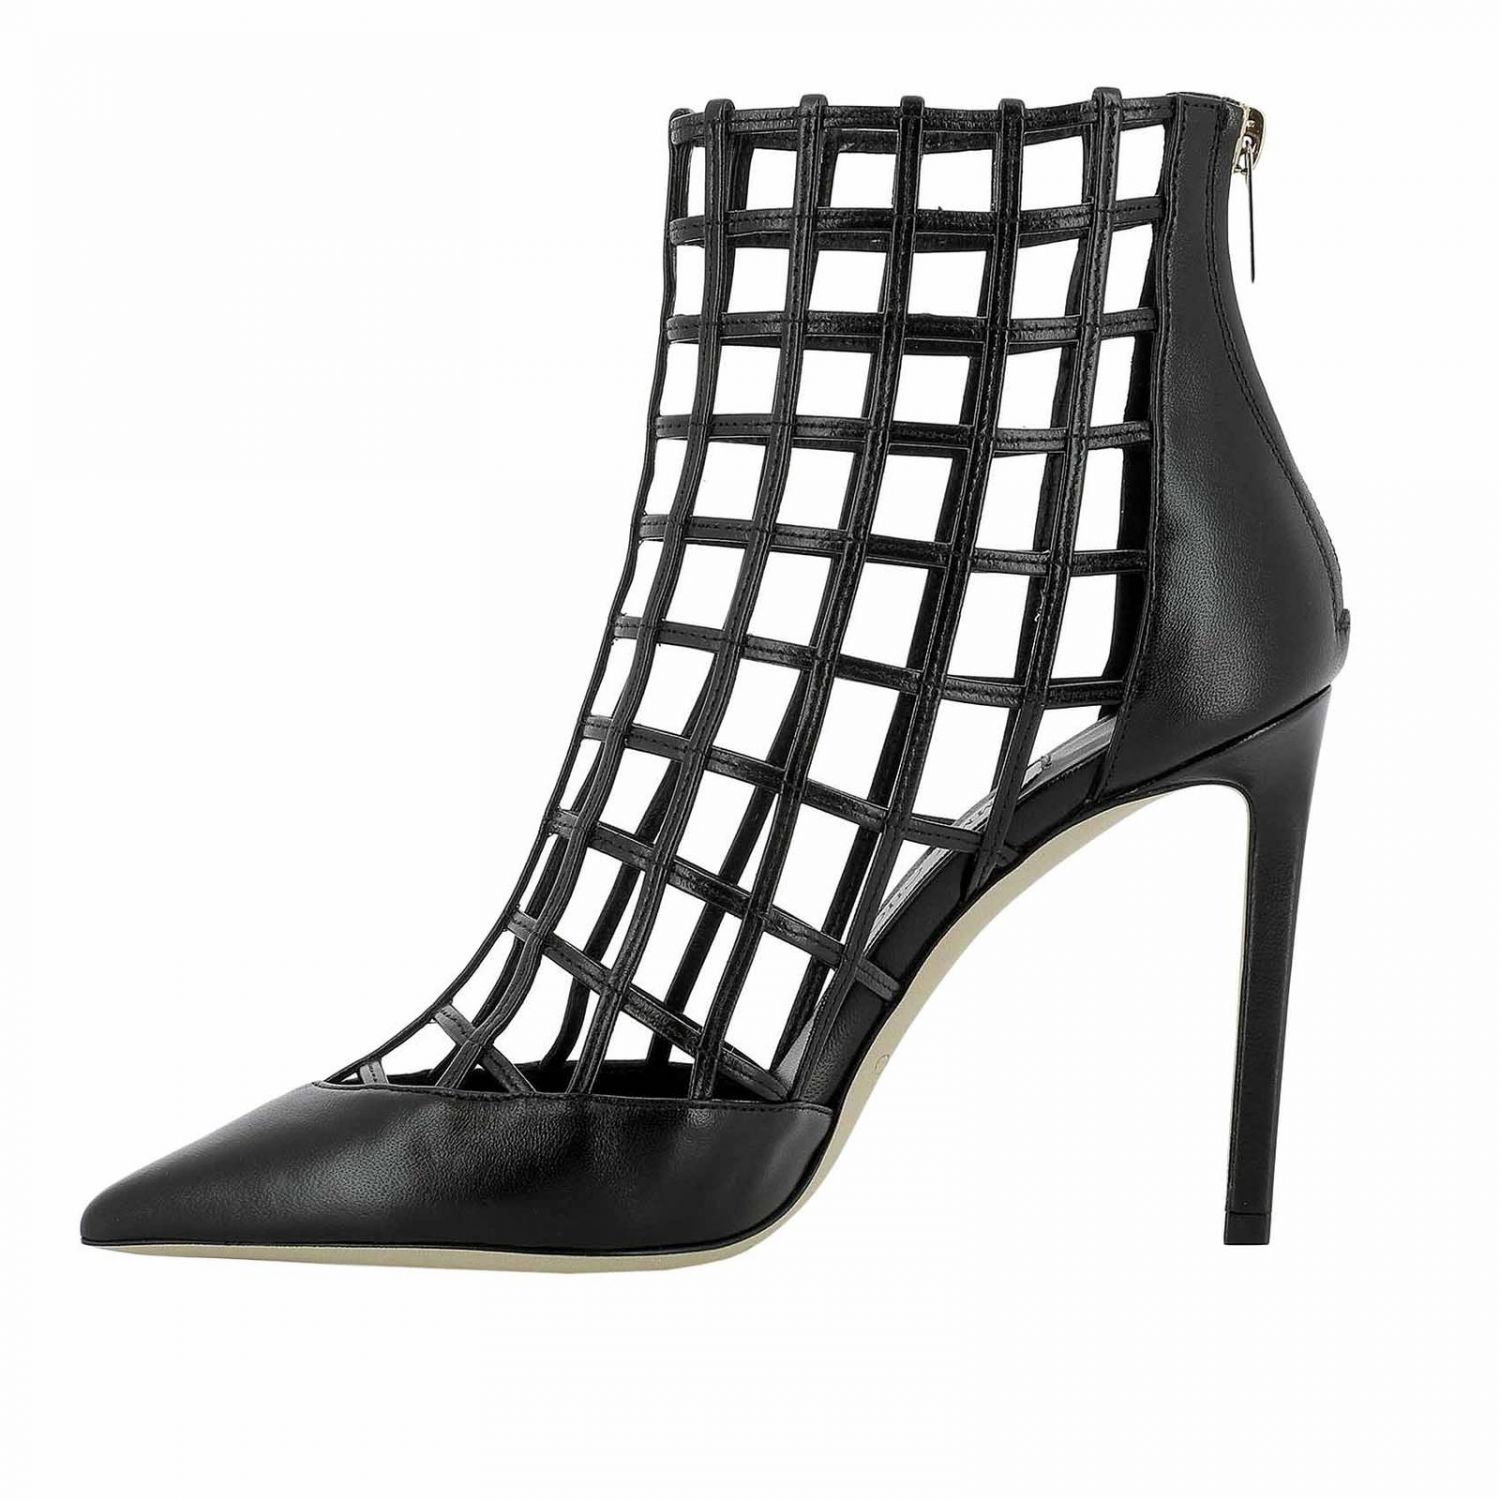 Jimmy Choo Outlet: high heel shoes for women - Black | Jimmy Choo high ...